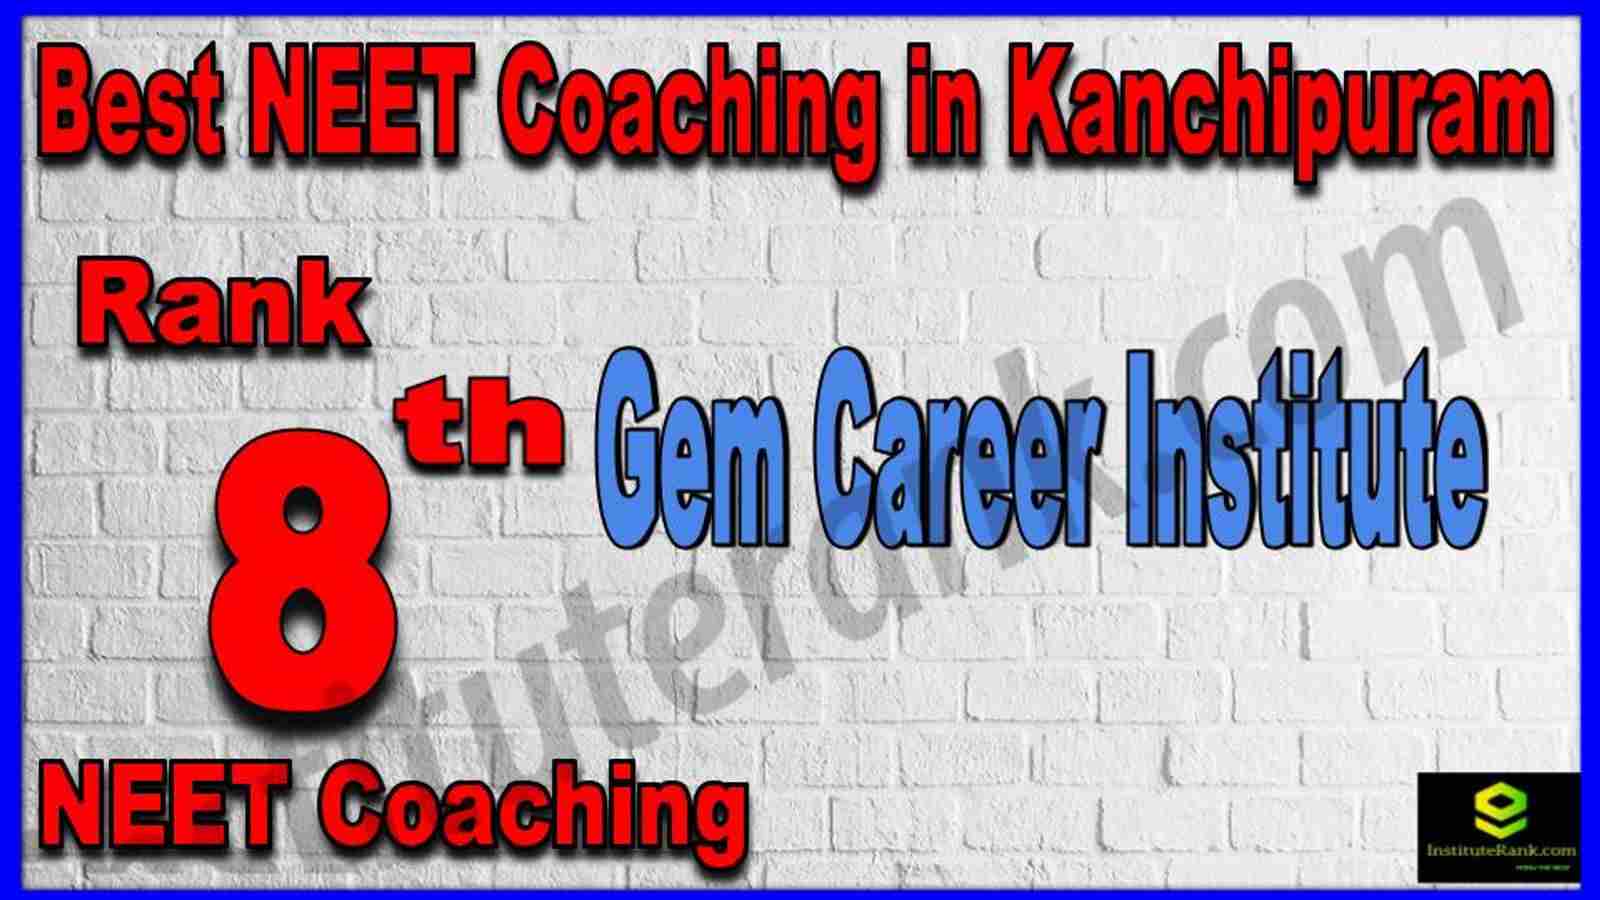 Rank 8th Best NEET Coaching in Kanchipuram